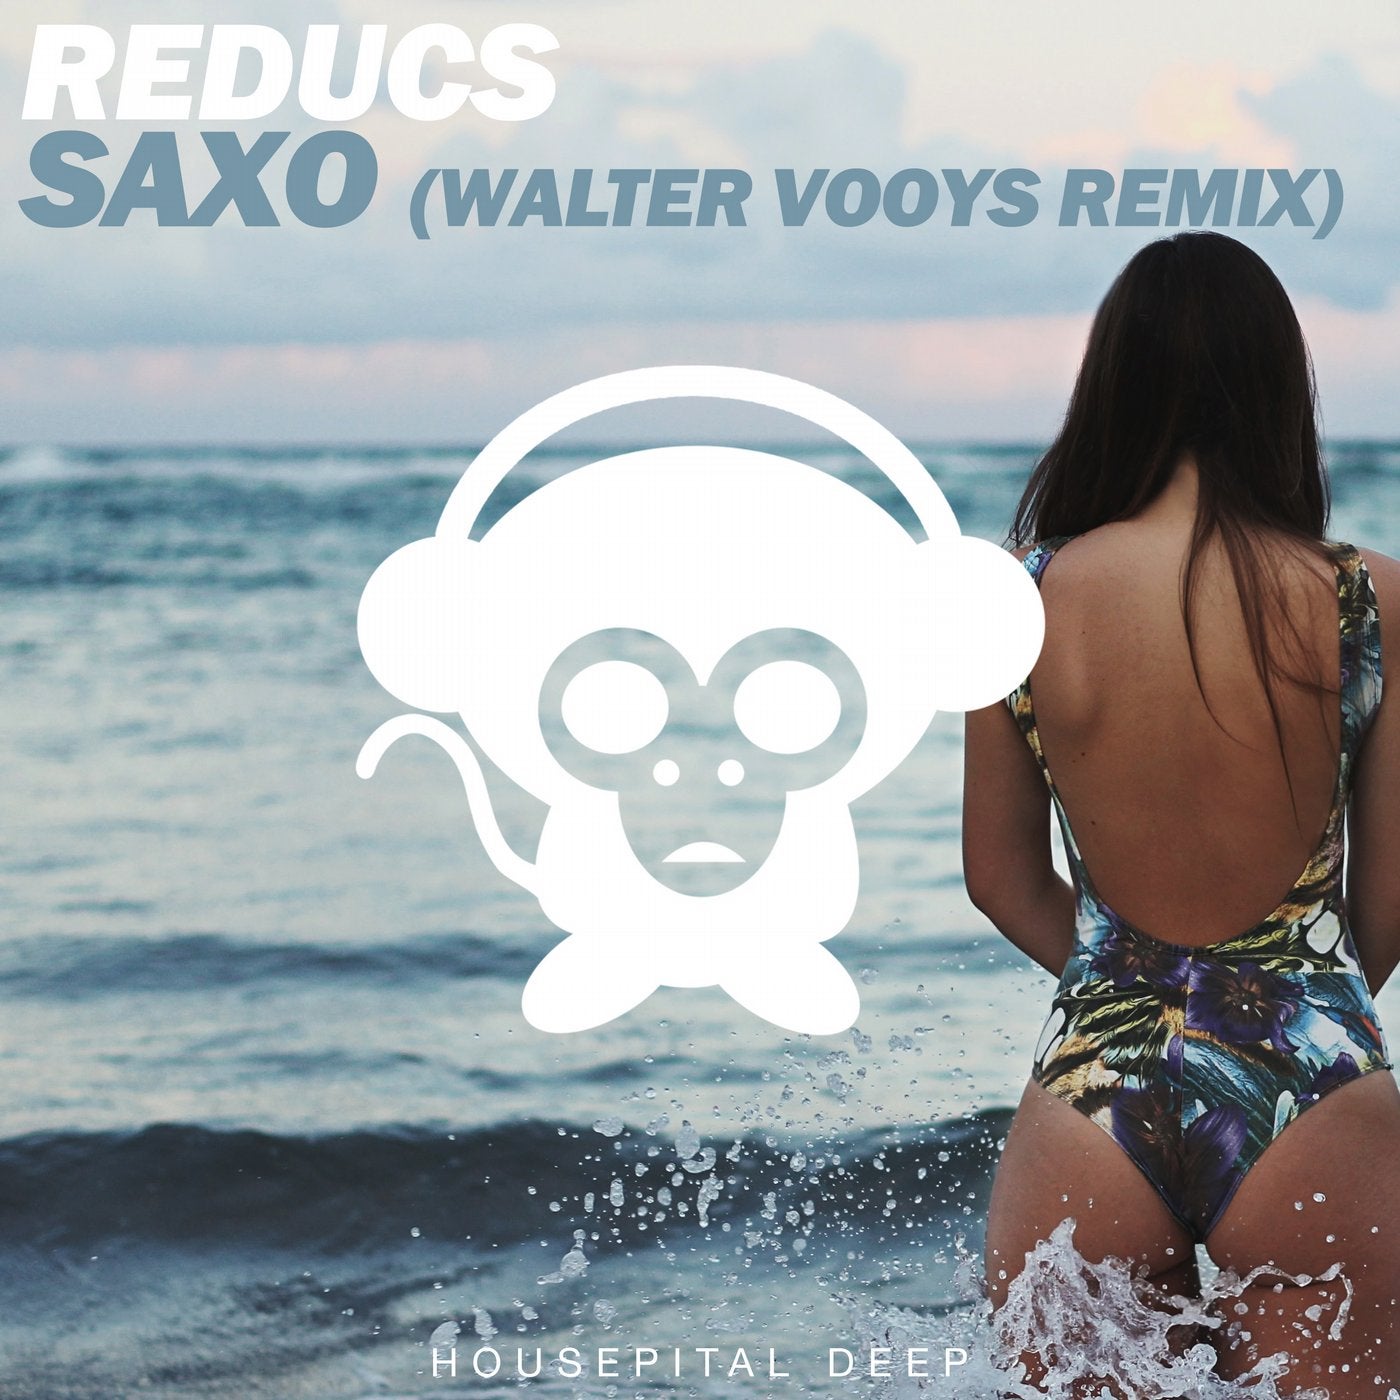 Saxo (Walter Vooys Remix)